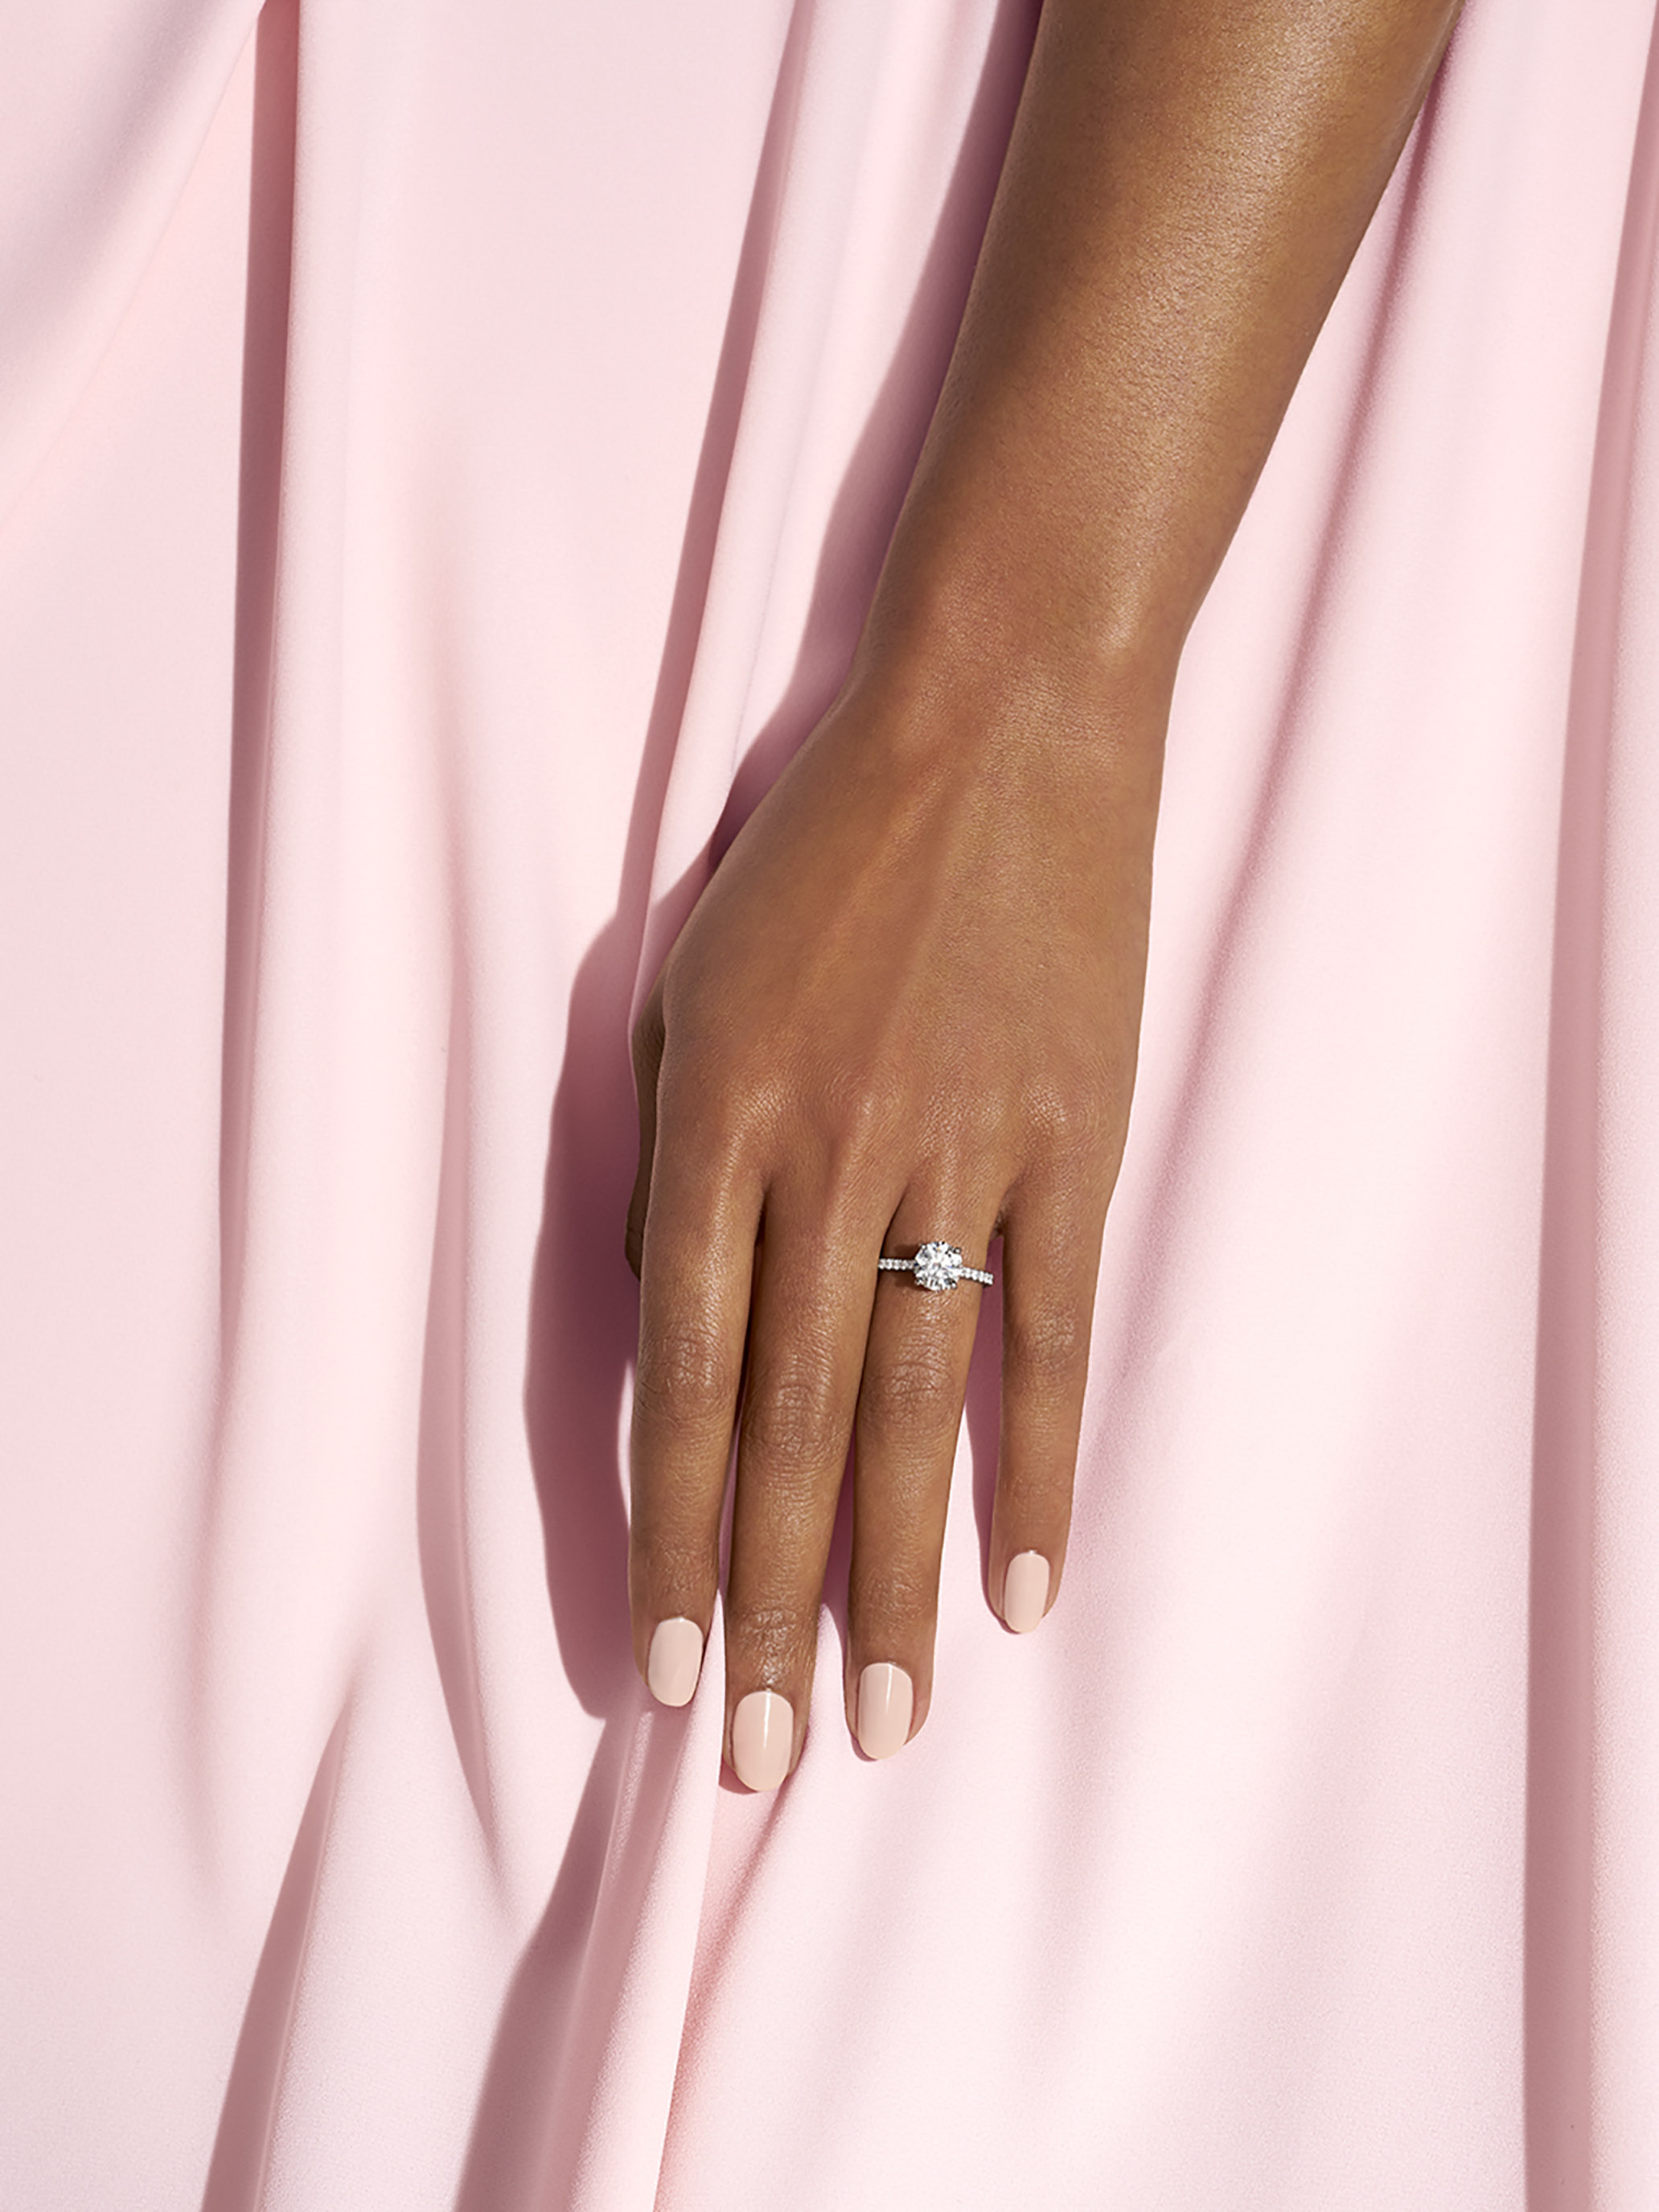 STAN Couple Engagement Rings Pave Diamond on Dark Skin Hand